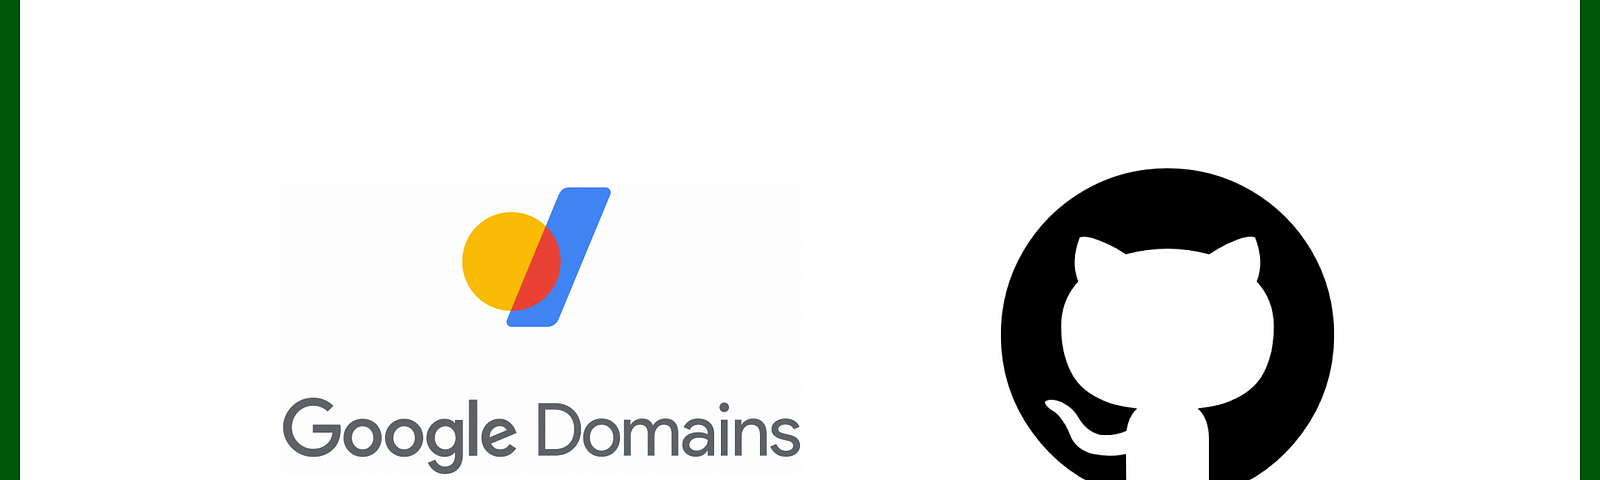 Google Domains logo and Github logo